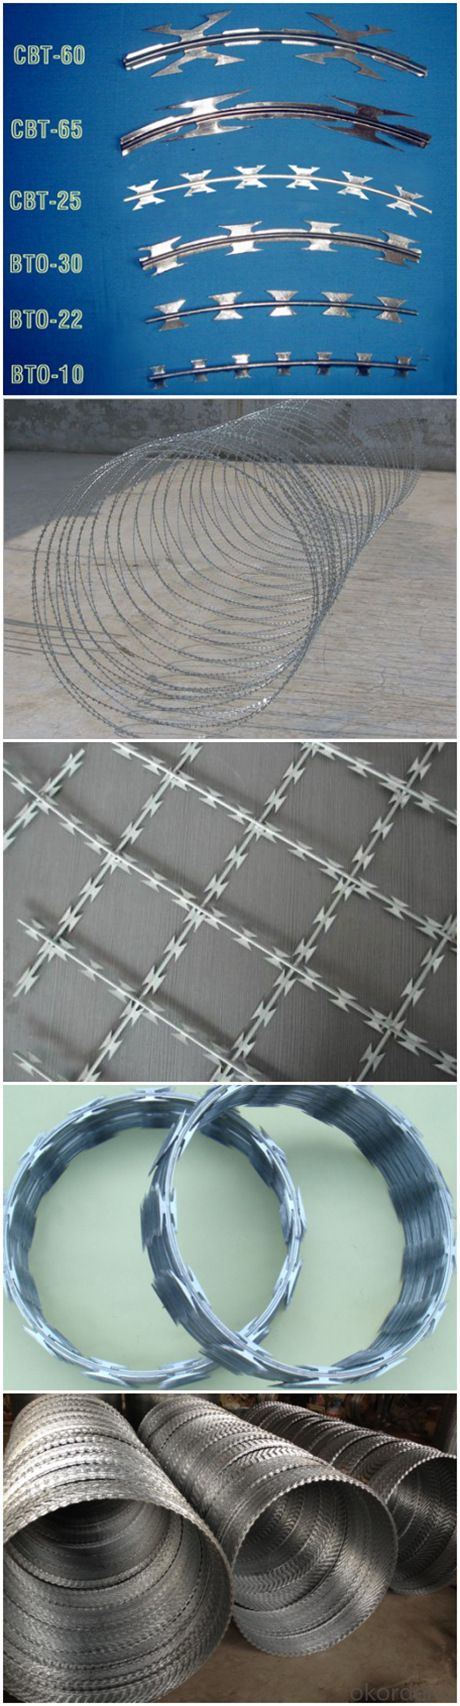 Factory Price Galvanized Razor Barbed Wire Made in China